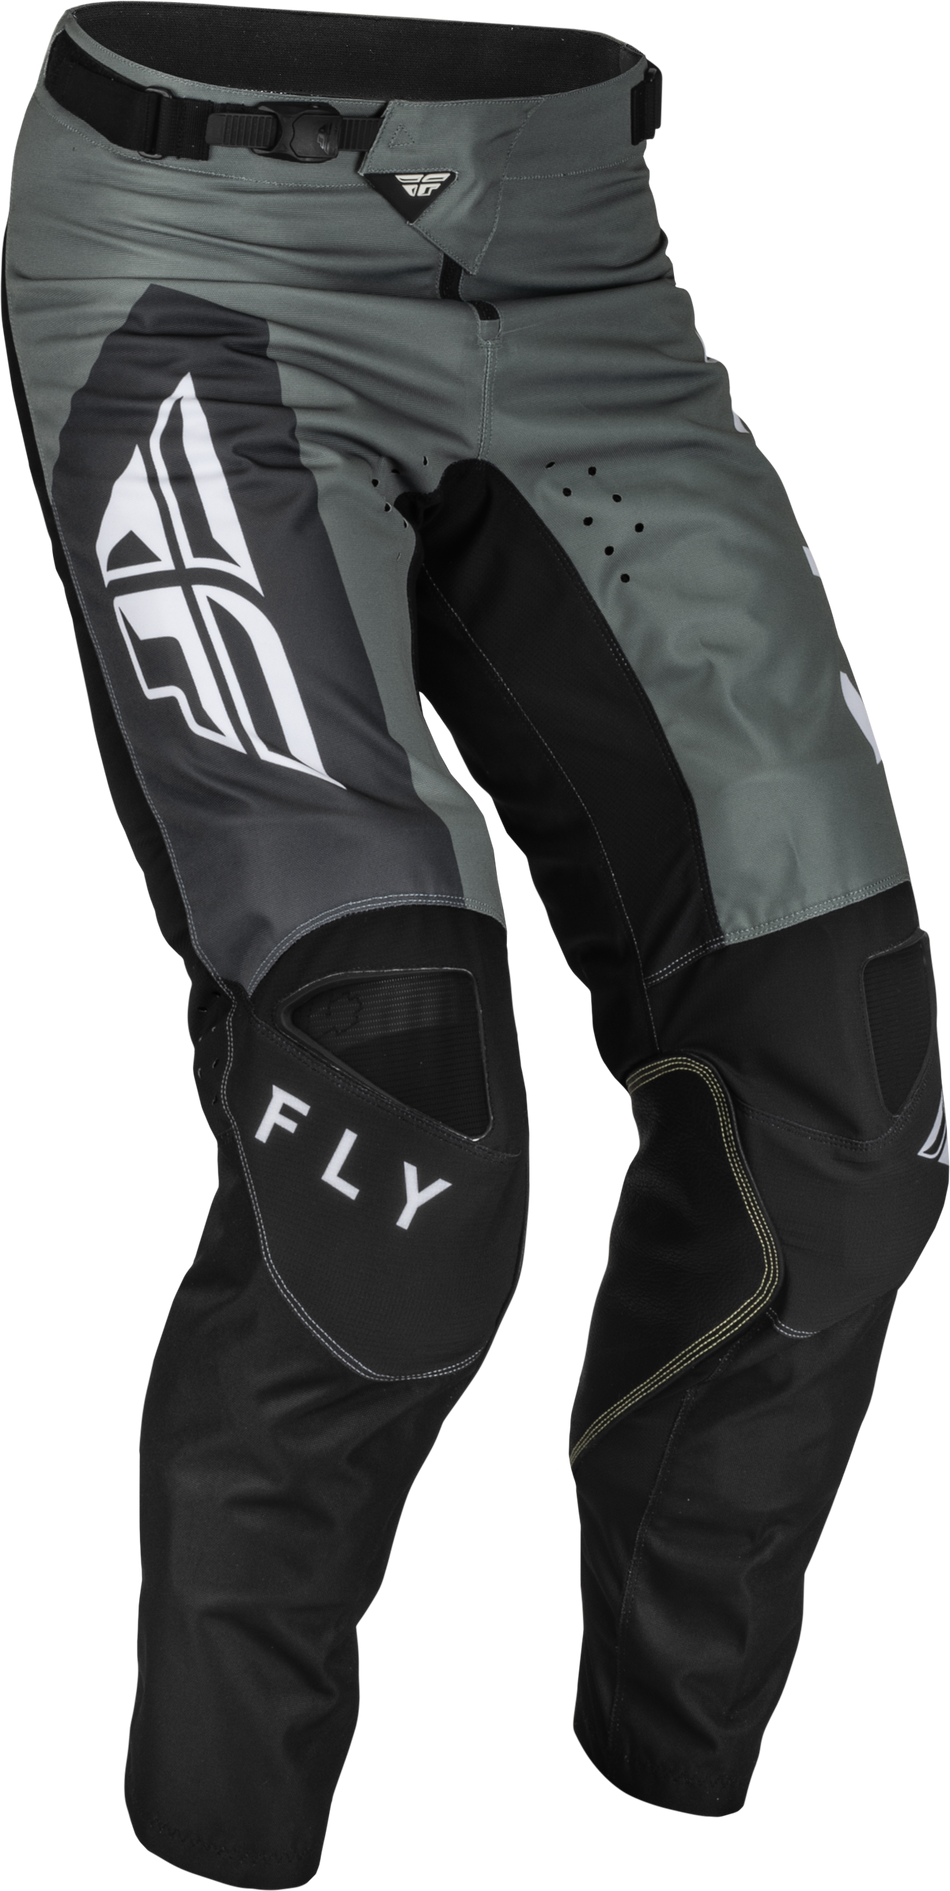 FLY RACING Kinetic Jet Pants Grey/Dark Grey/Black Sz 42 376-53342